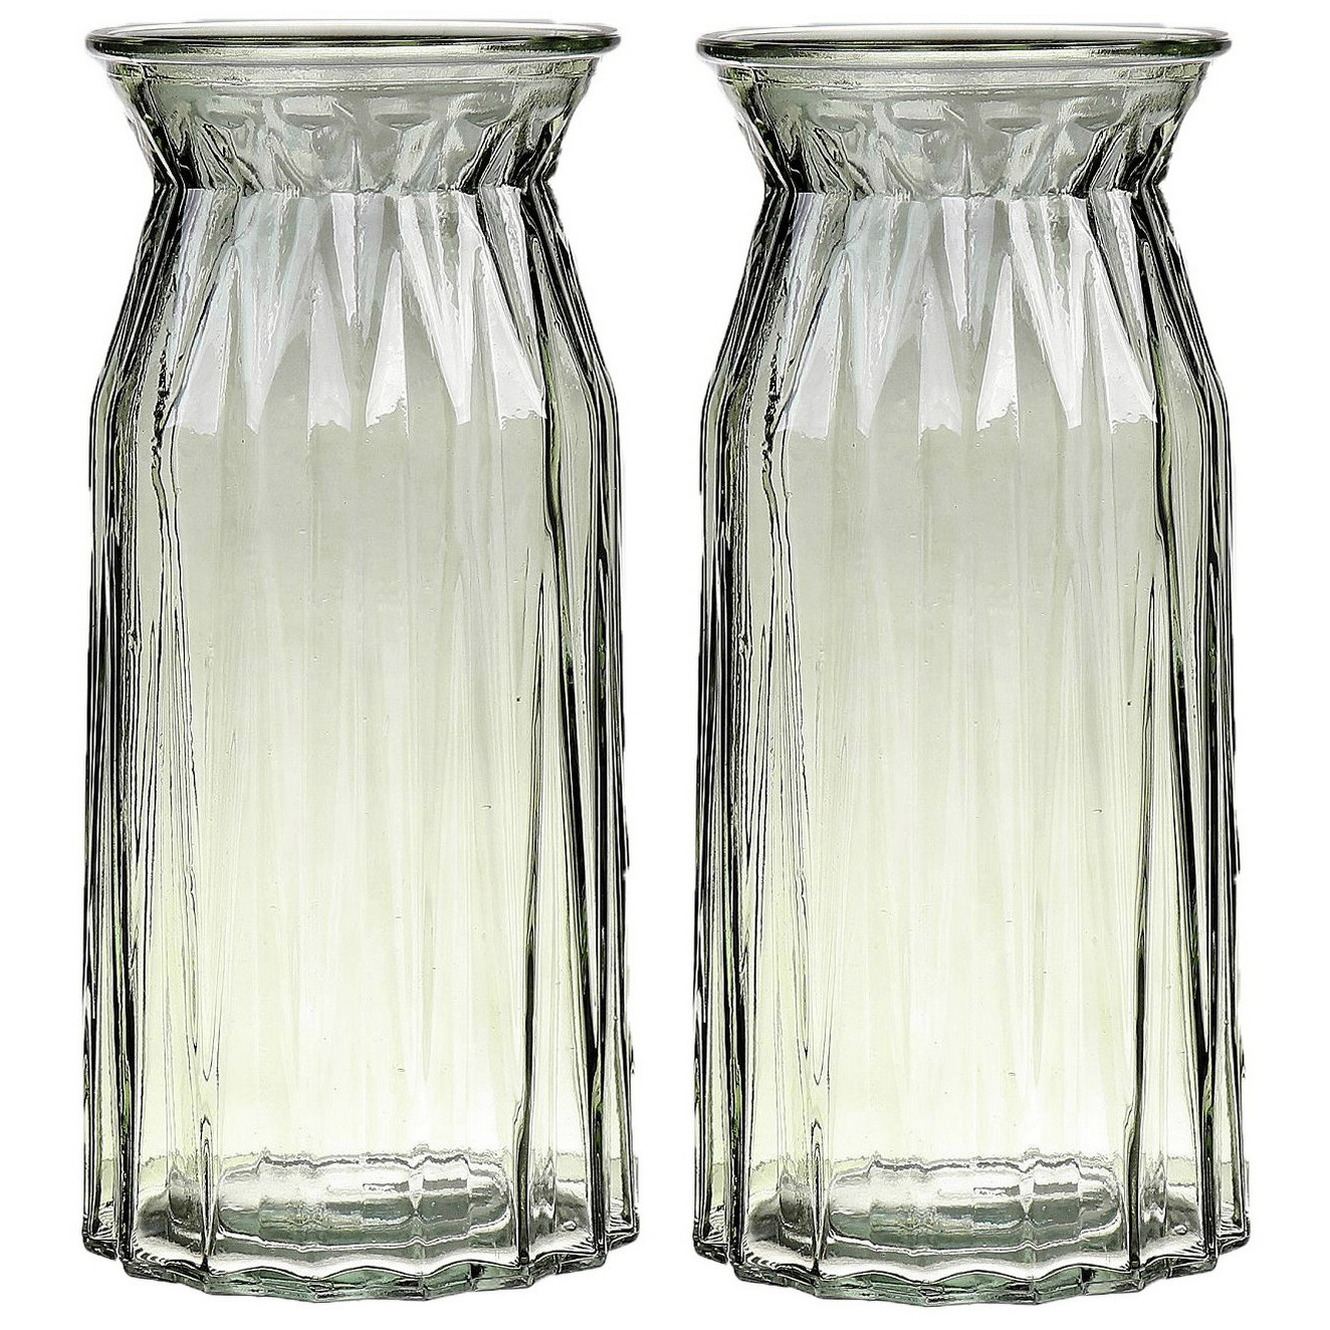 Bellatio Design Bloemenvaas - set van 2x - lichtgroen - transparant glas - D12 x H24 cm -